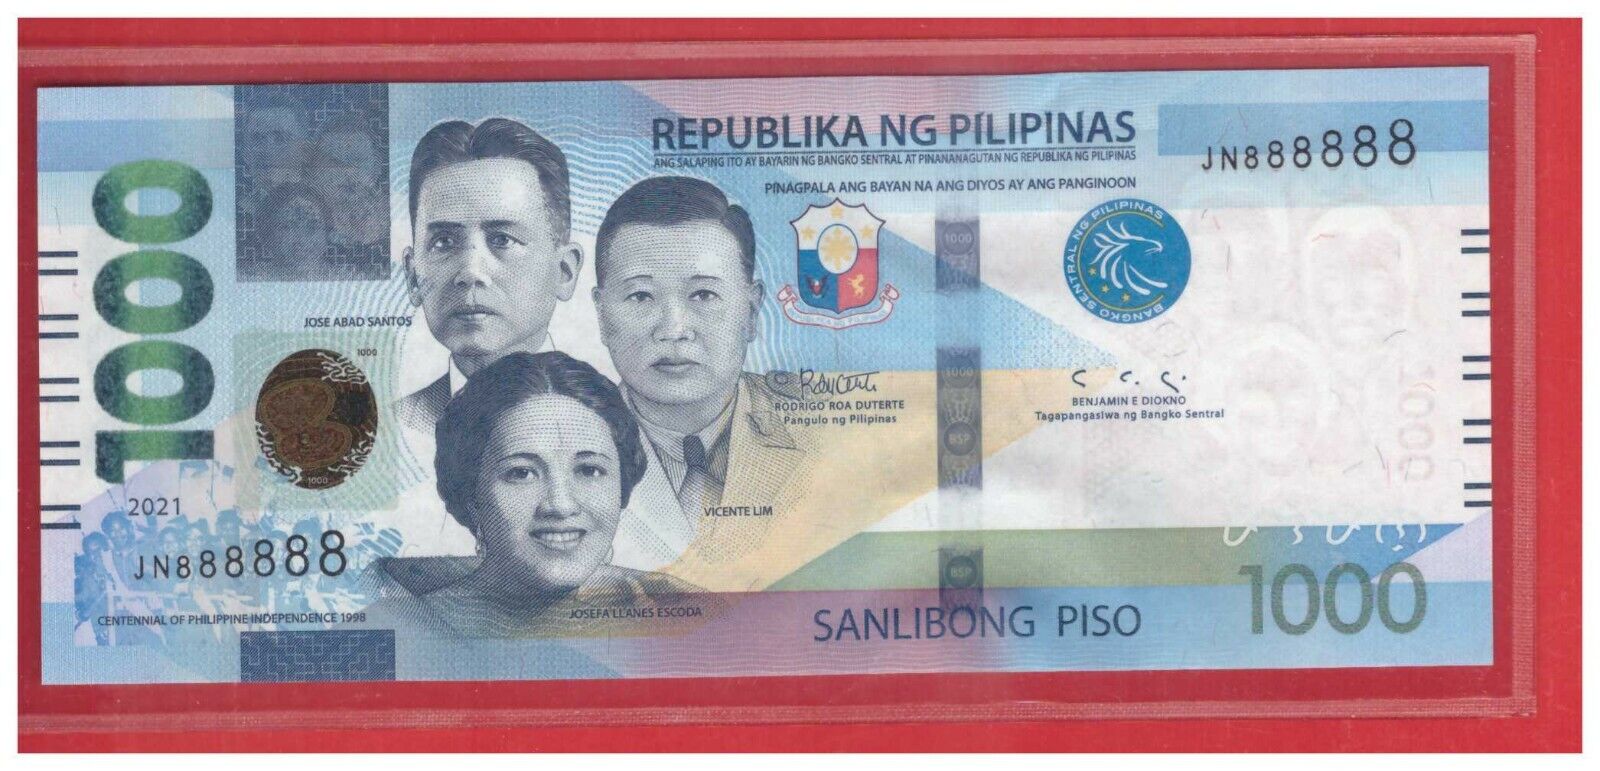 2021 Philippines 1000 Peso Piso New Enhanced Ngc Duterte Solid Jn 888888 Unc